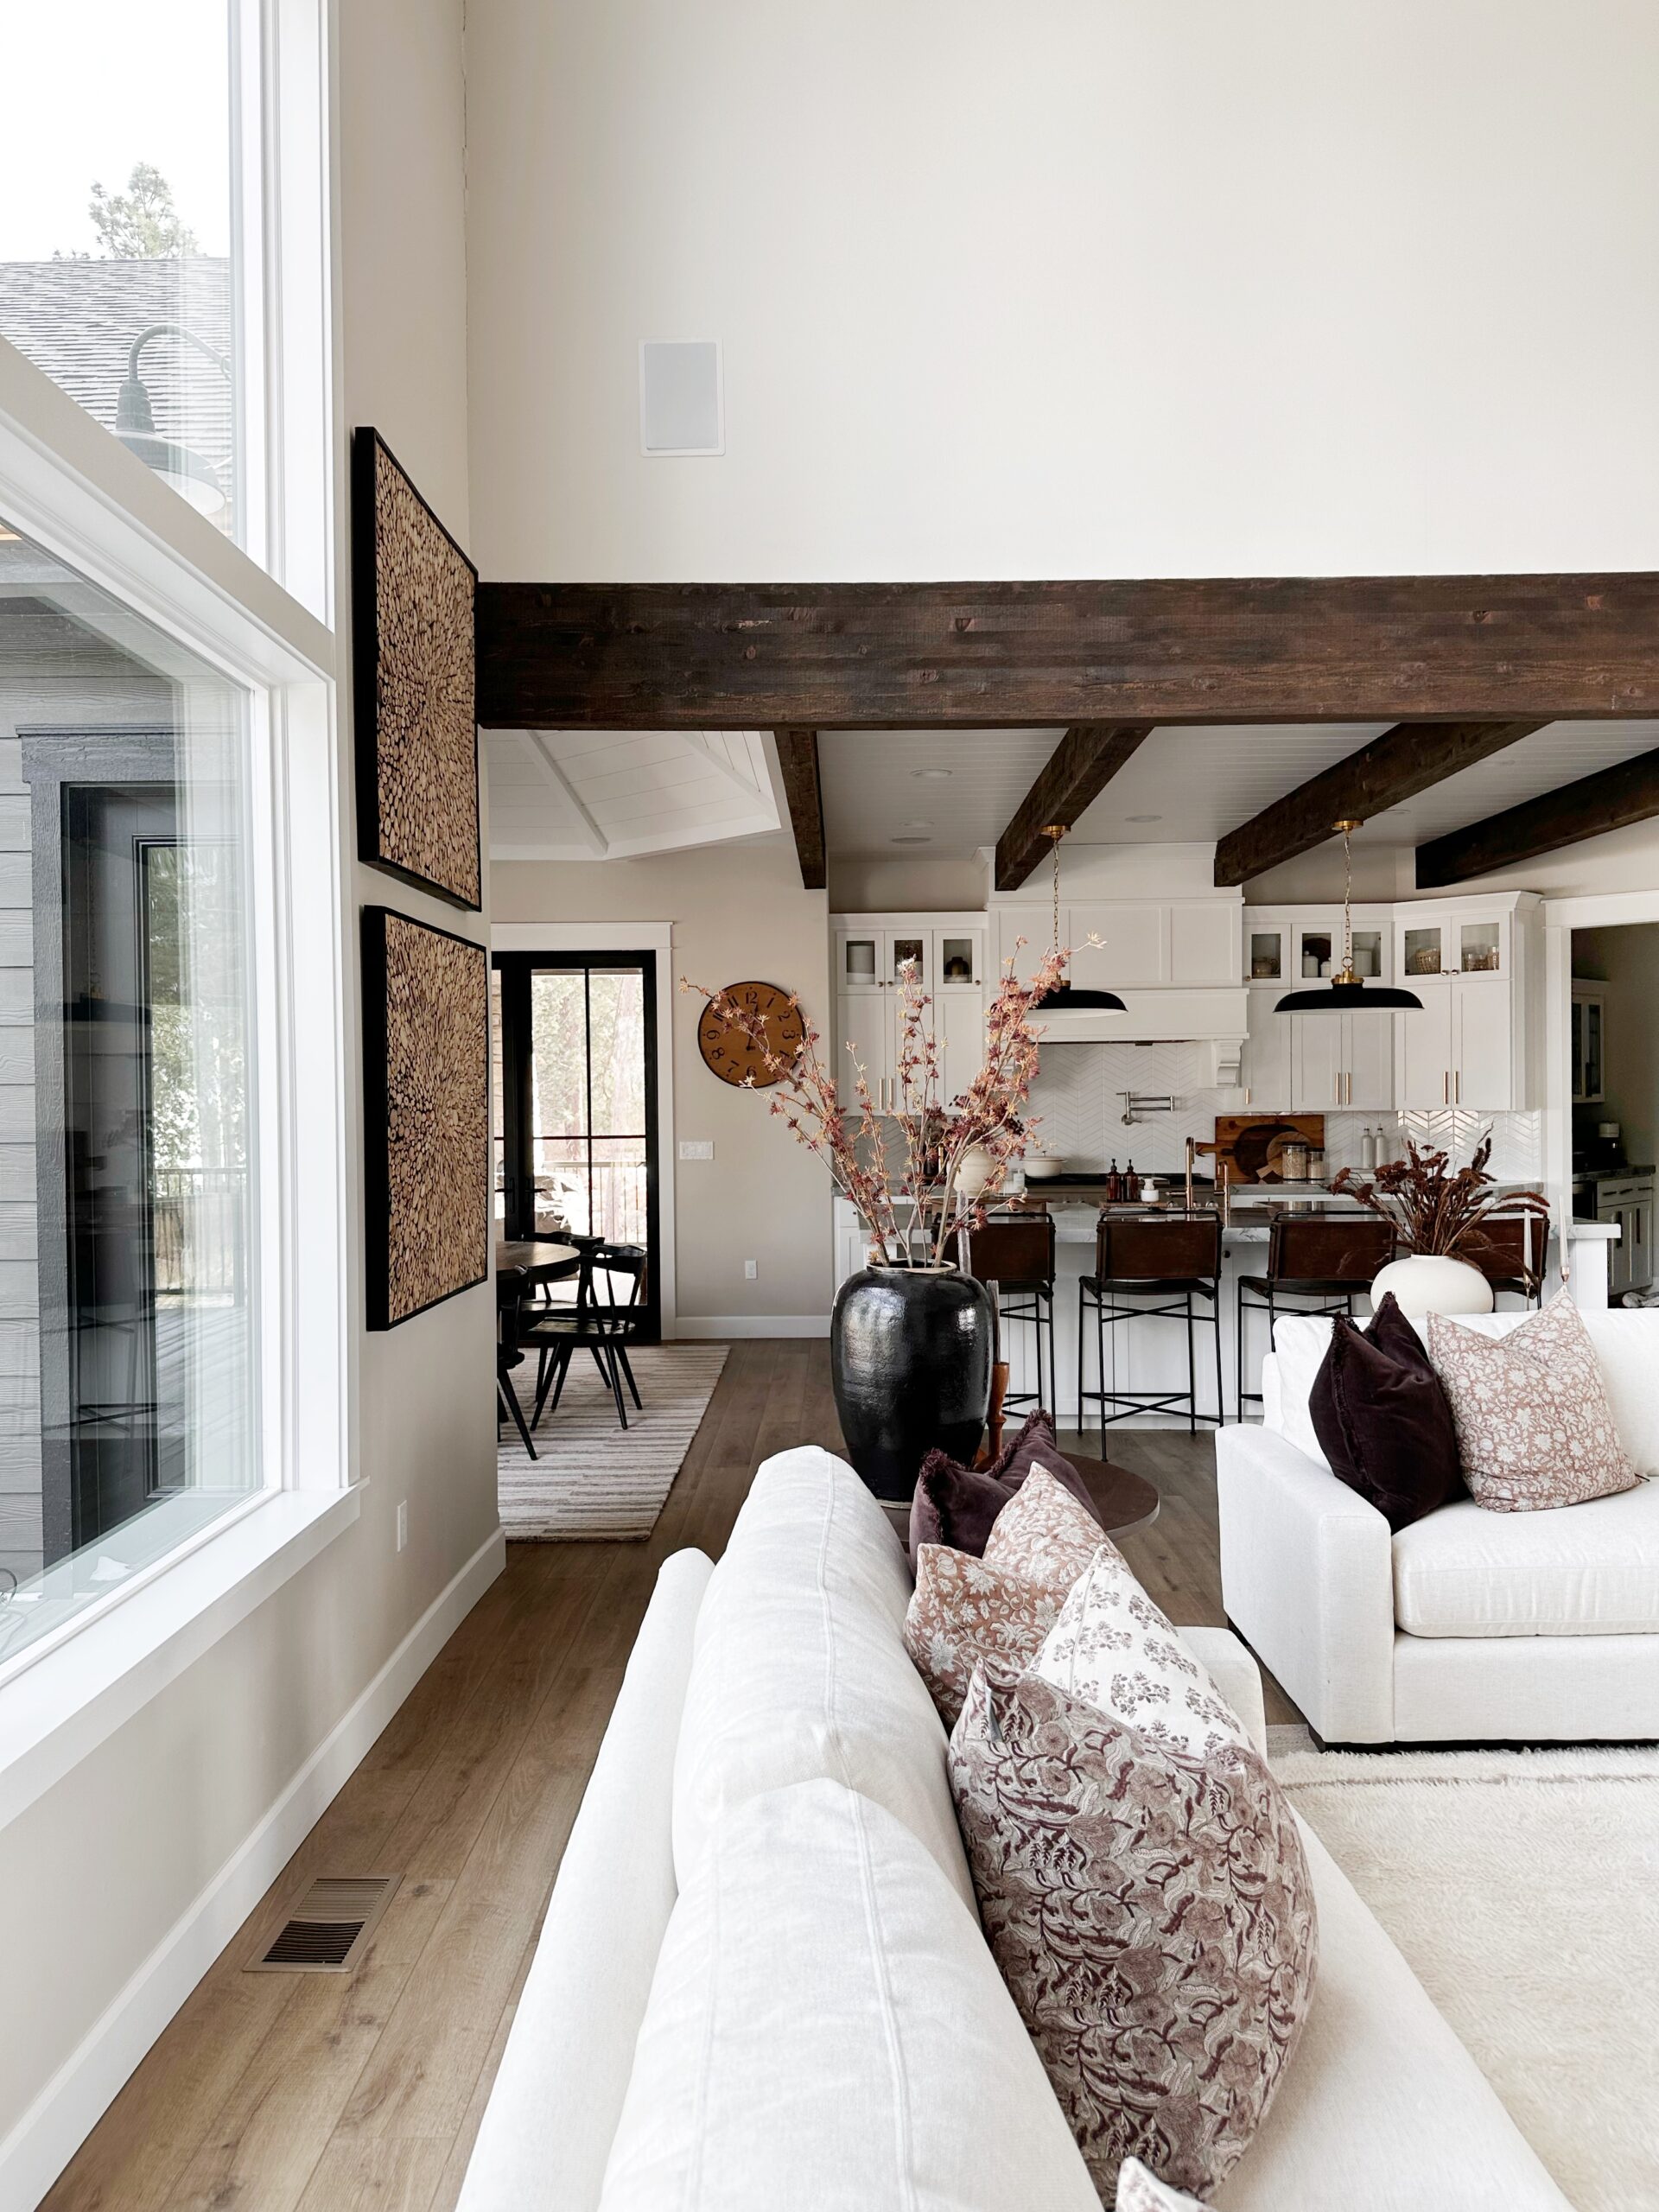 Living Room Refresh from Arhaus